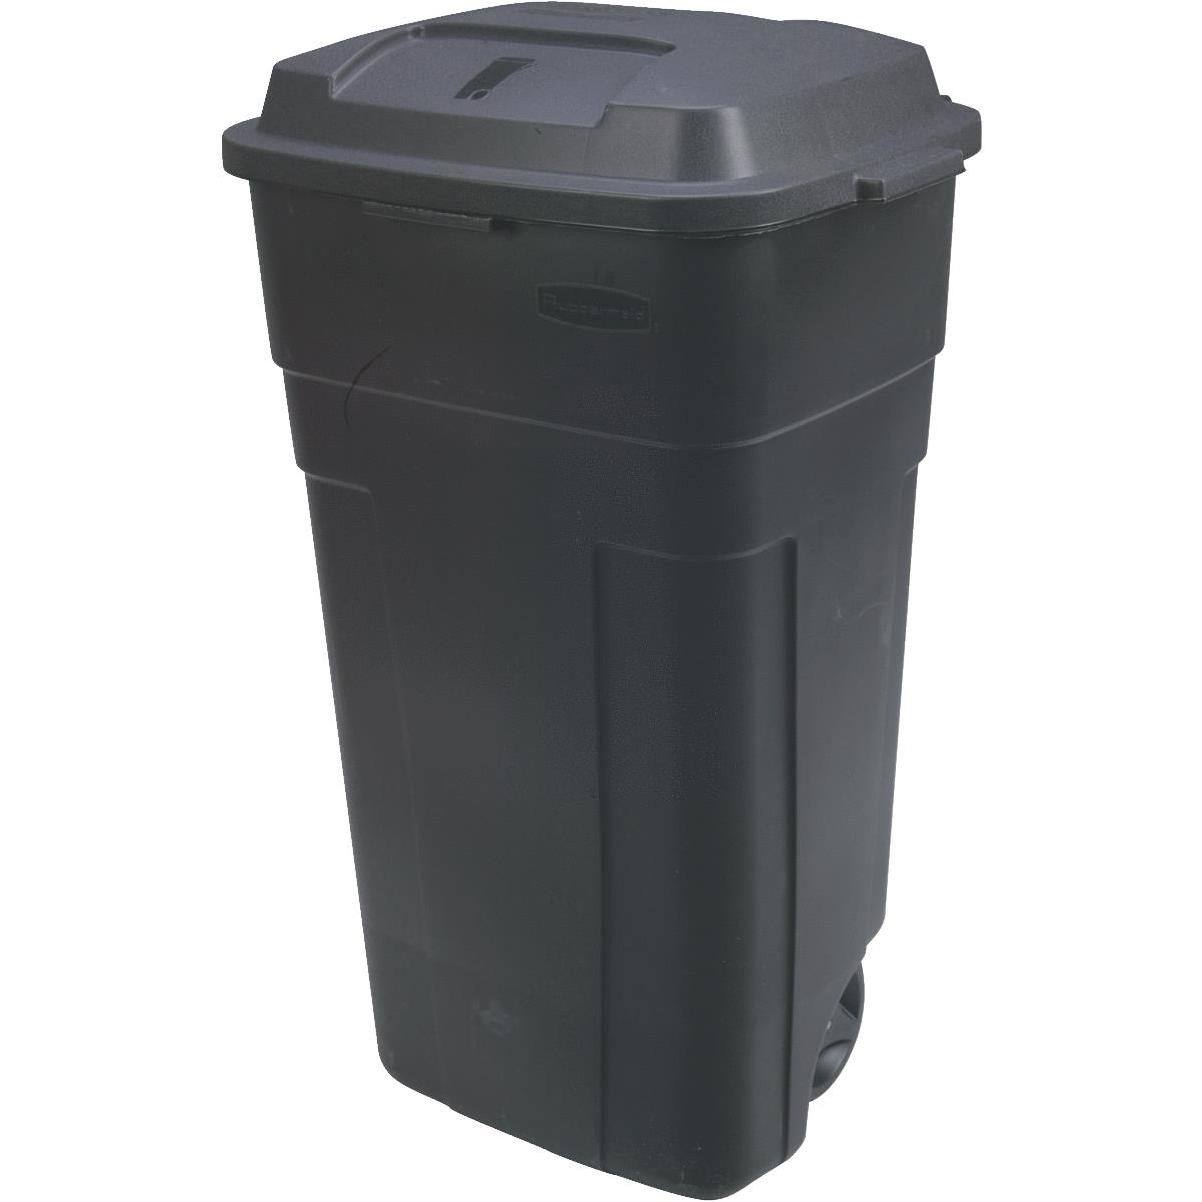 Roughneck 20-Gallon Black Plastic Trash Can